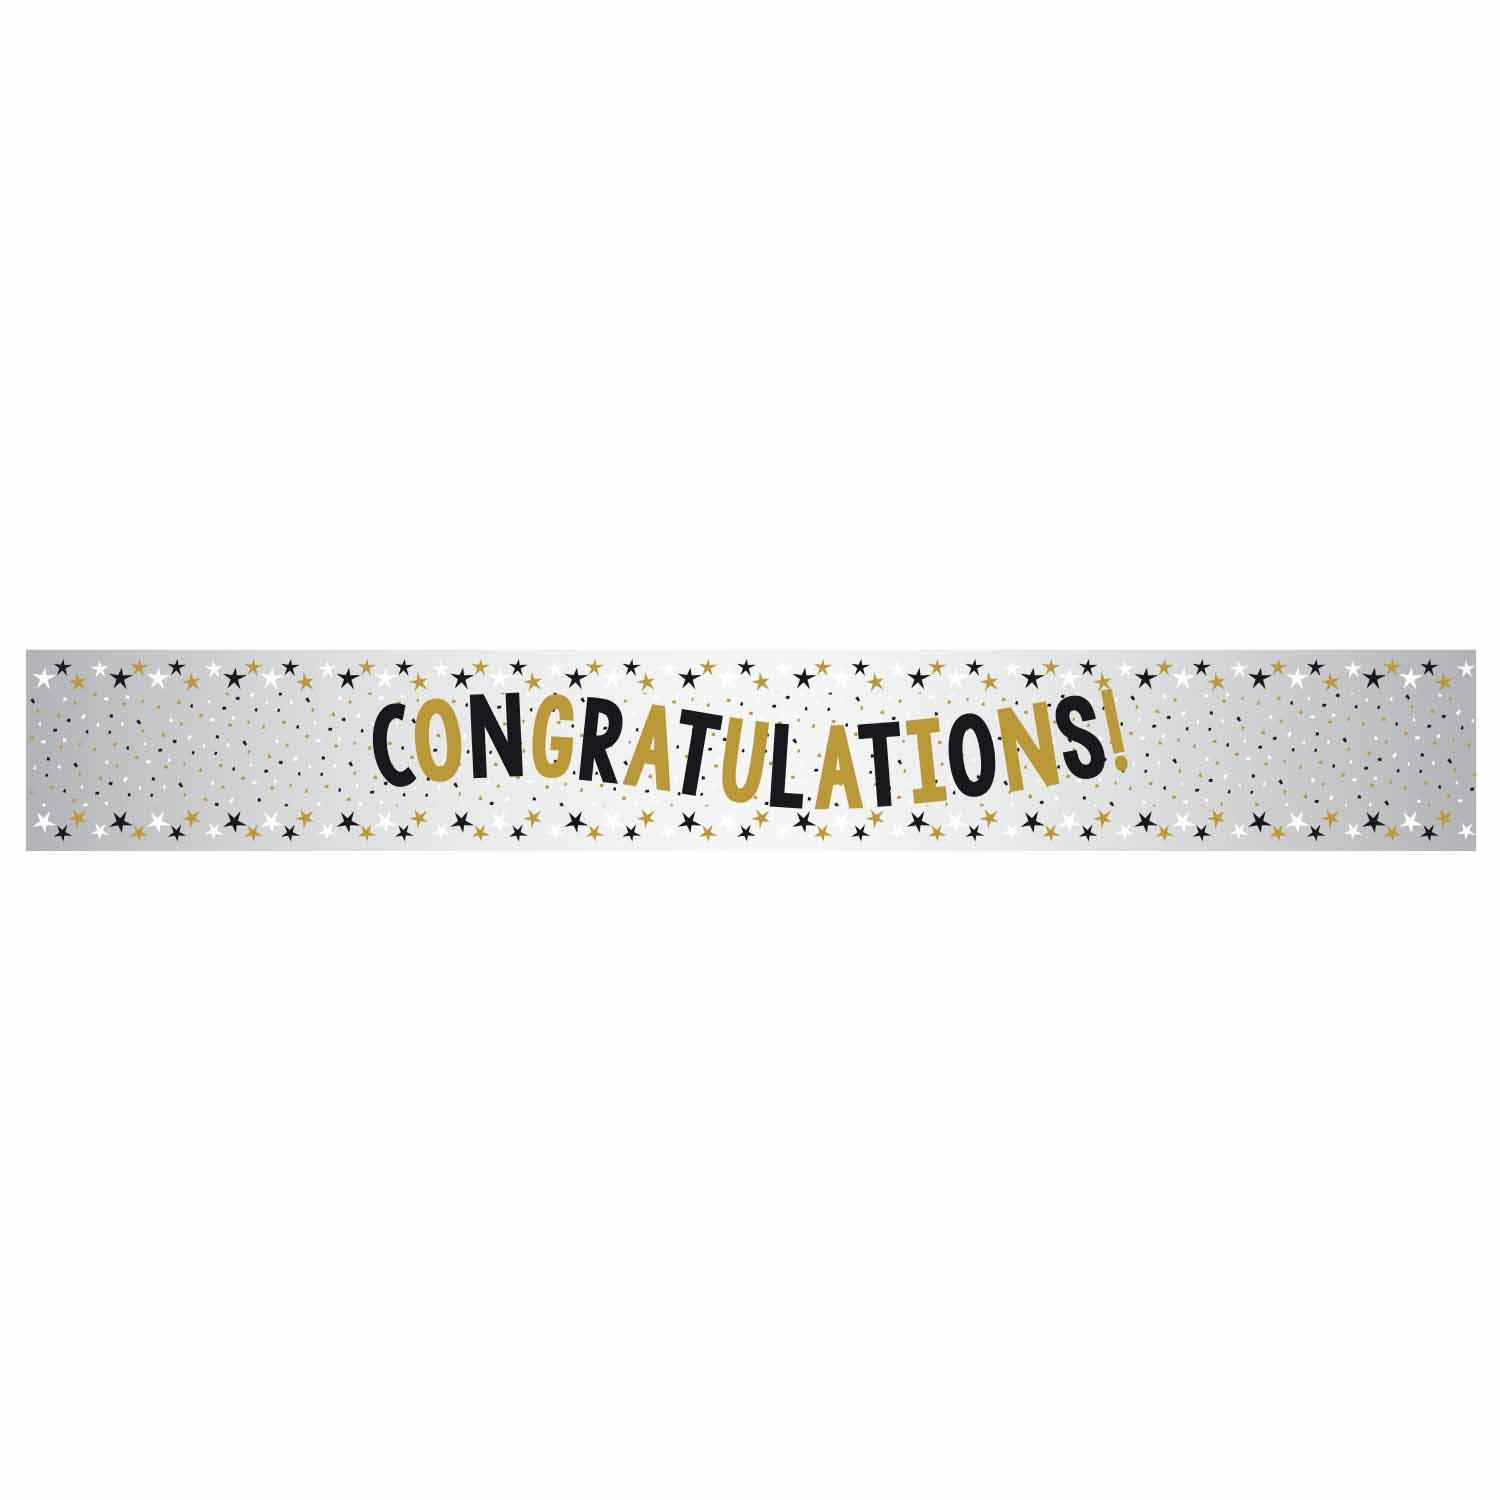 Congratulations Foil Banner Black/Silver/Gold